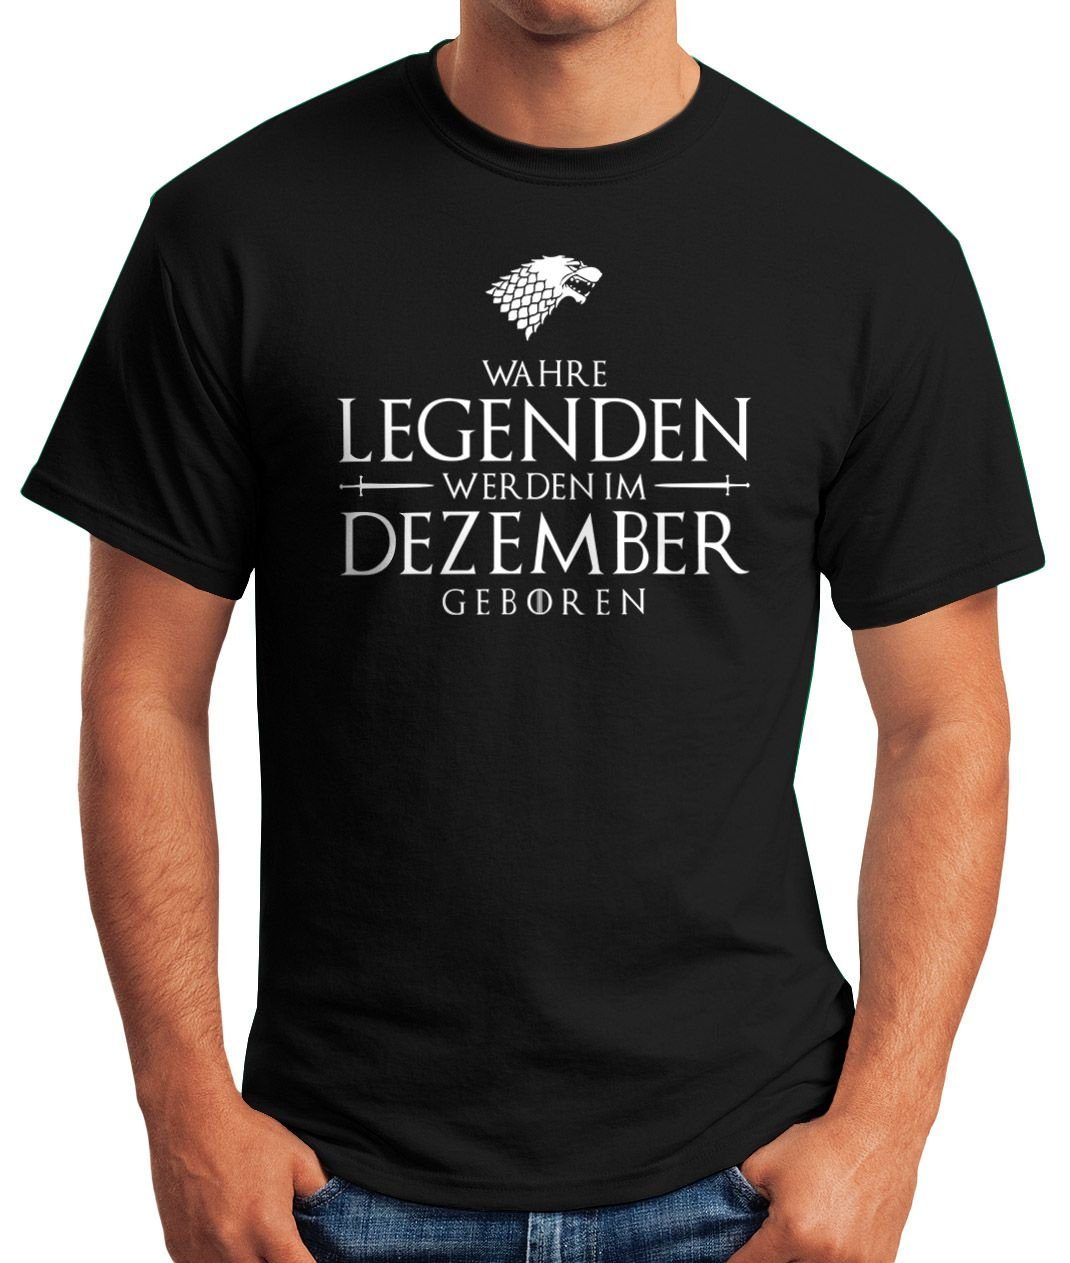 MoonWorks Print-Shirt Herren Fun-Shirt Dezember Wahre mit Moonworks® T-Shirt [object Object] Print werden im geboren Legenden schwarz